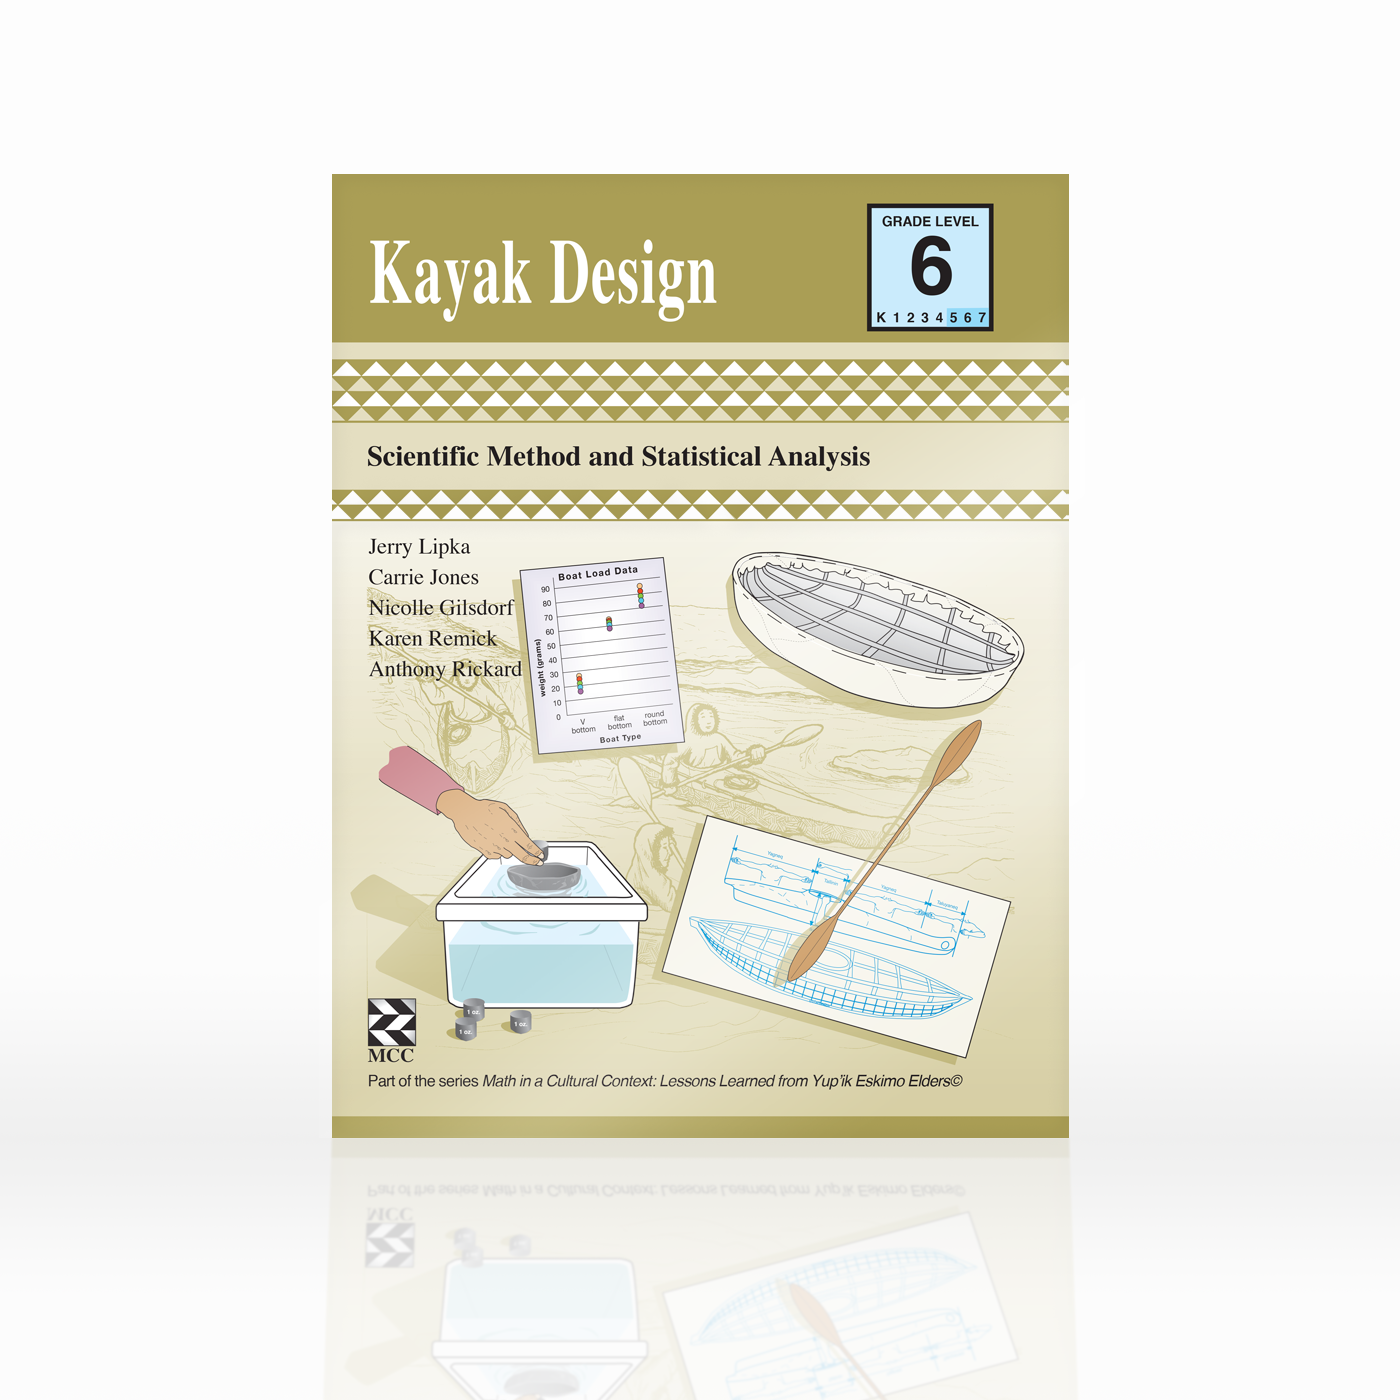 Kayak Design module cover